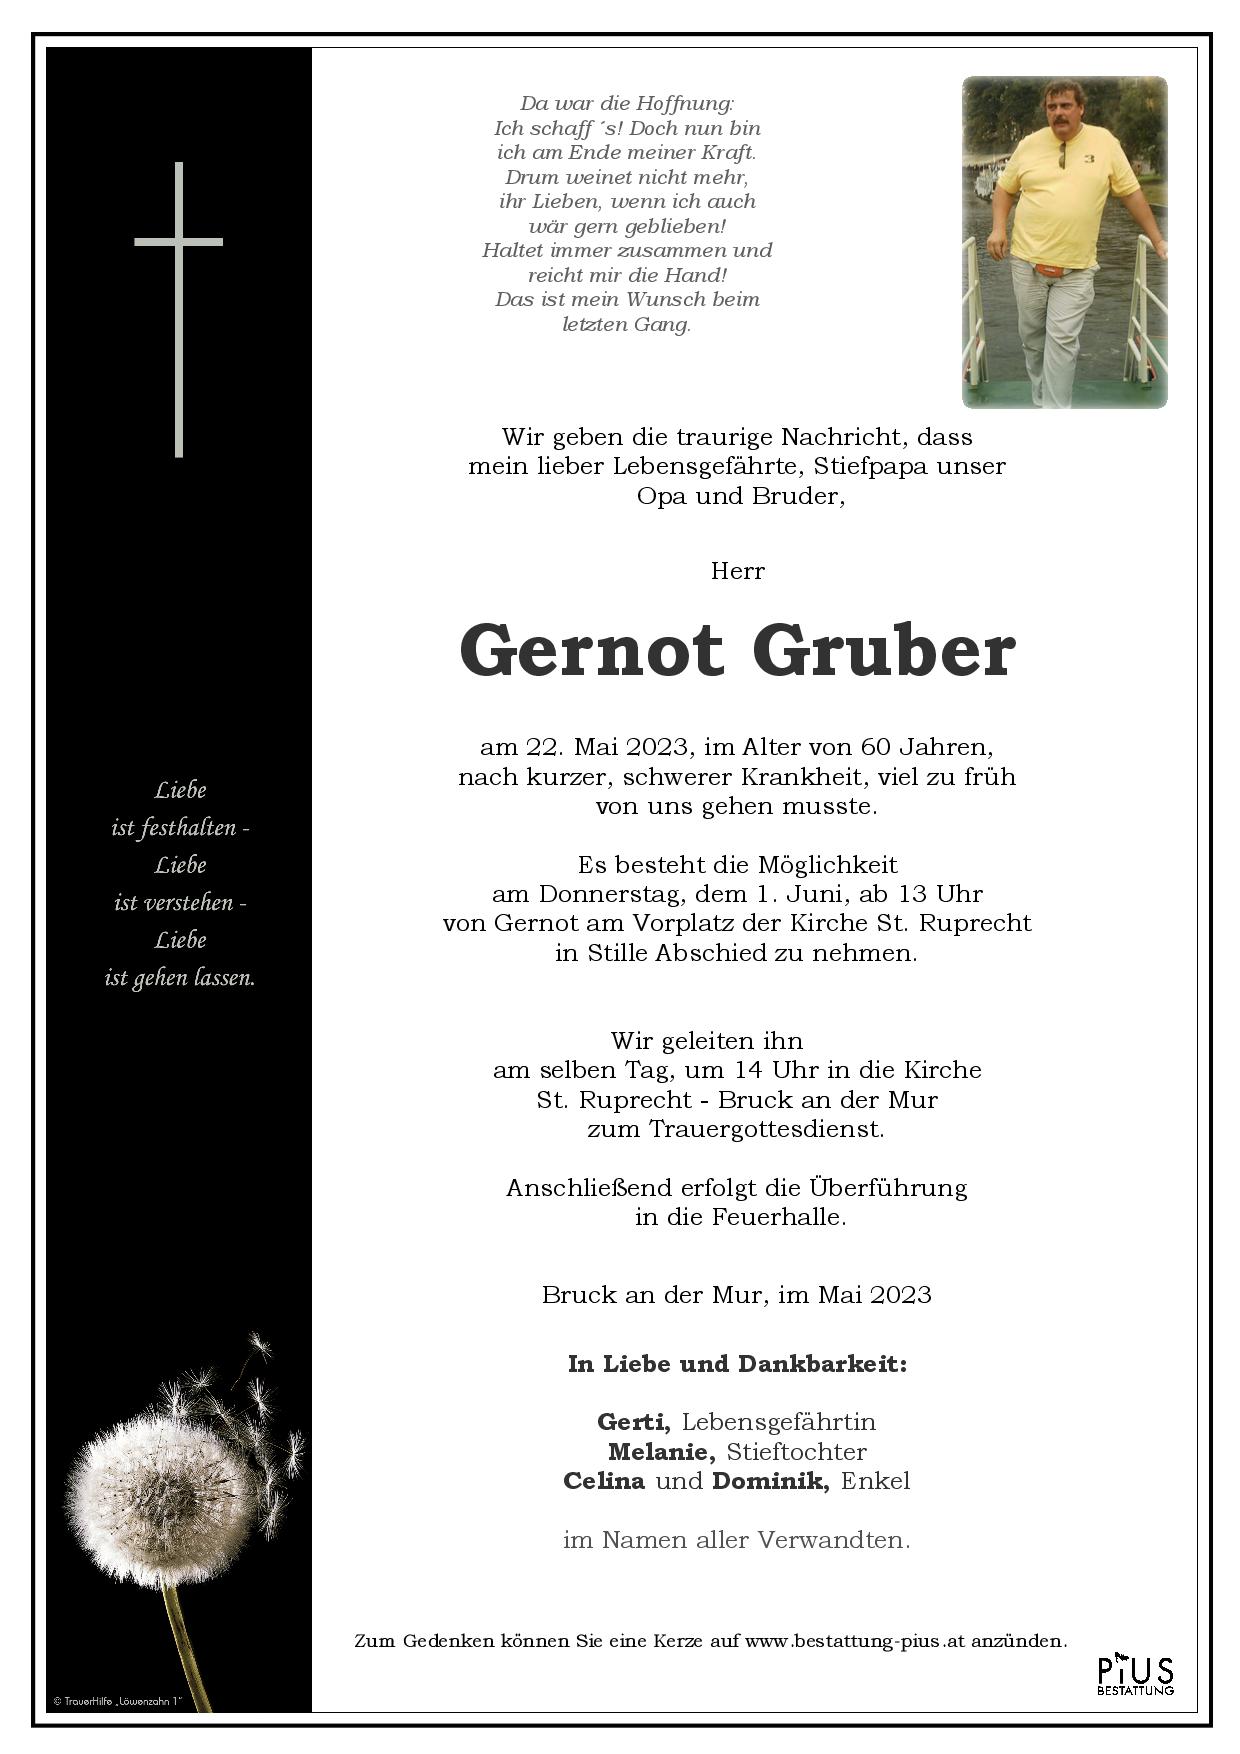 Gernot Gruber